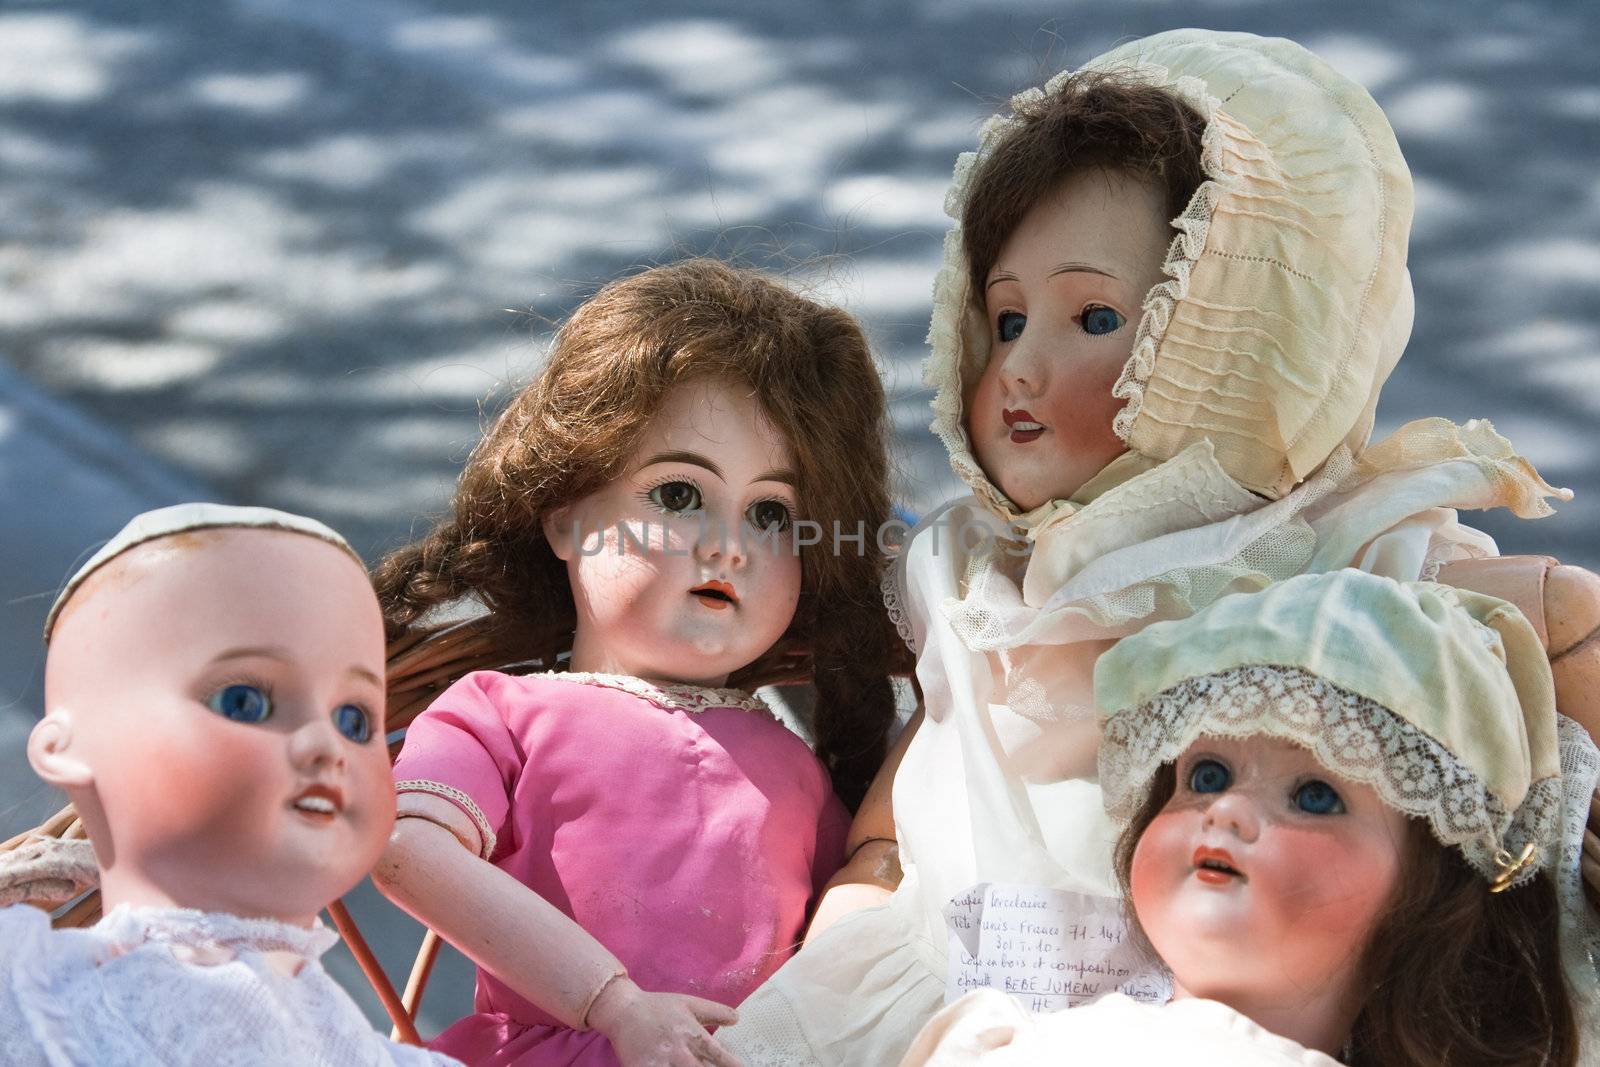 Antique dolls at a outdoor Paris flea market by corot2